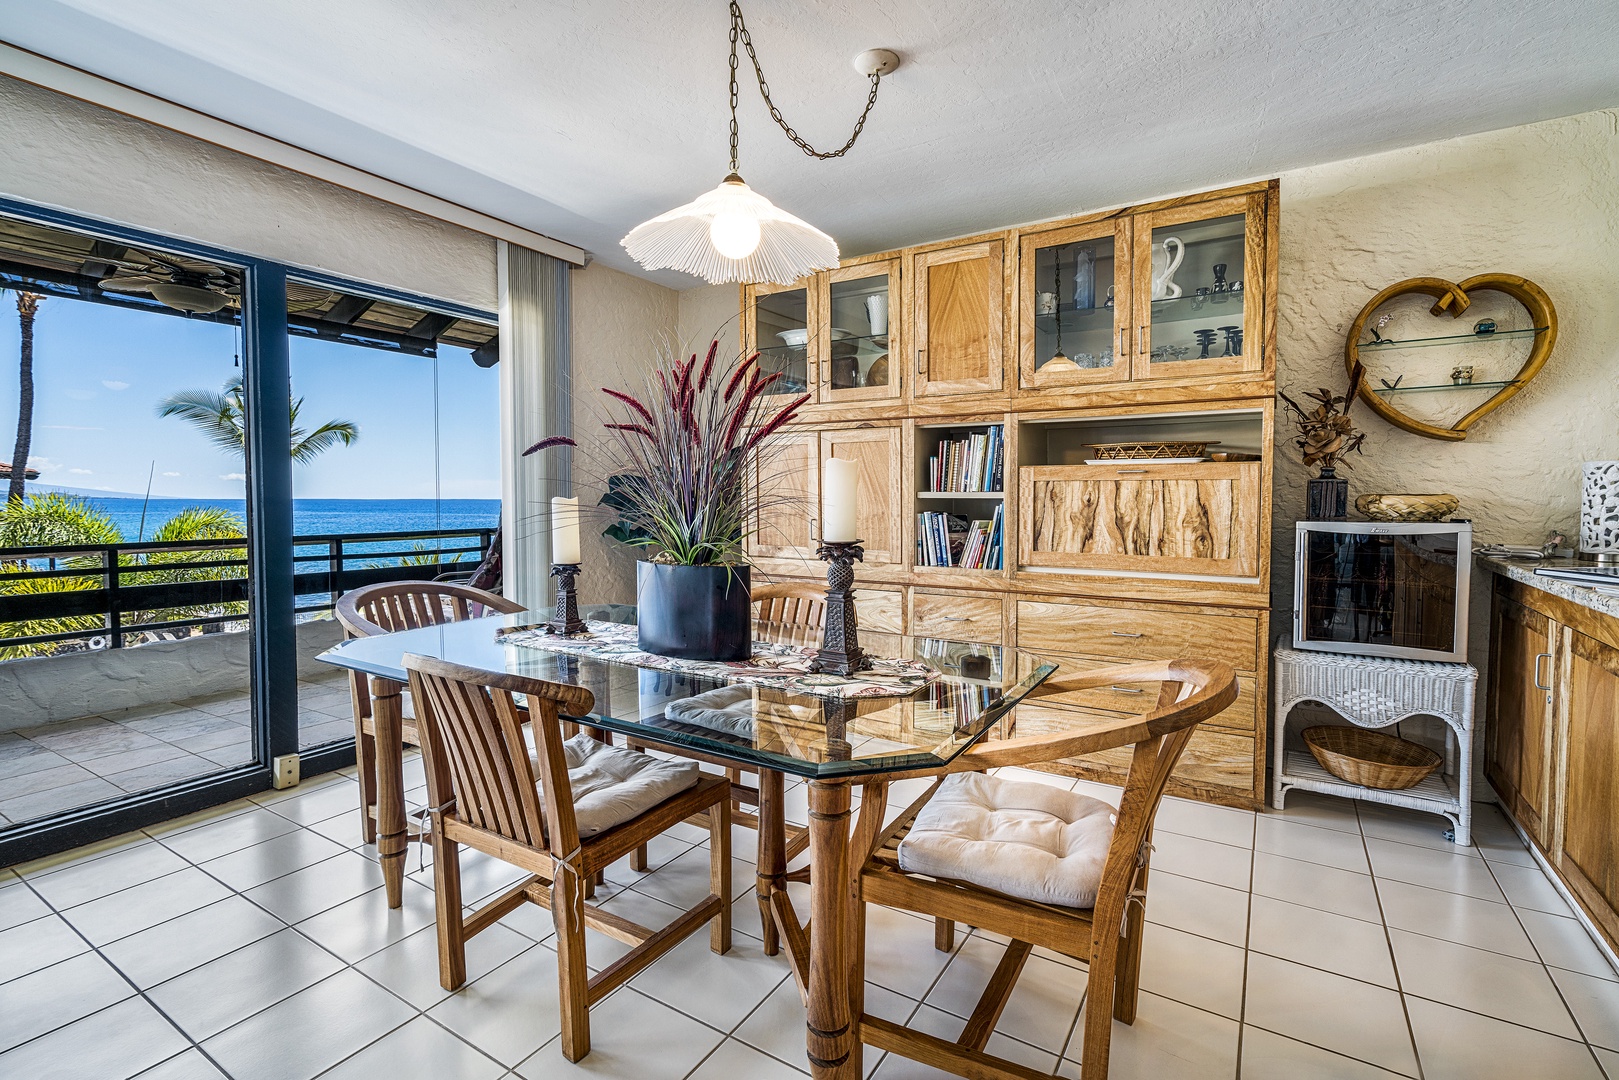 Kailua Kona Vacation Rentals, Casa De Emdeko 336 - You even have a view of the coastline from the dining room!